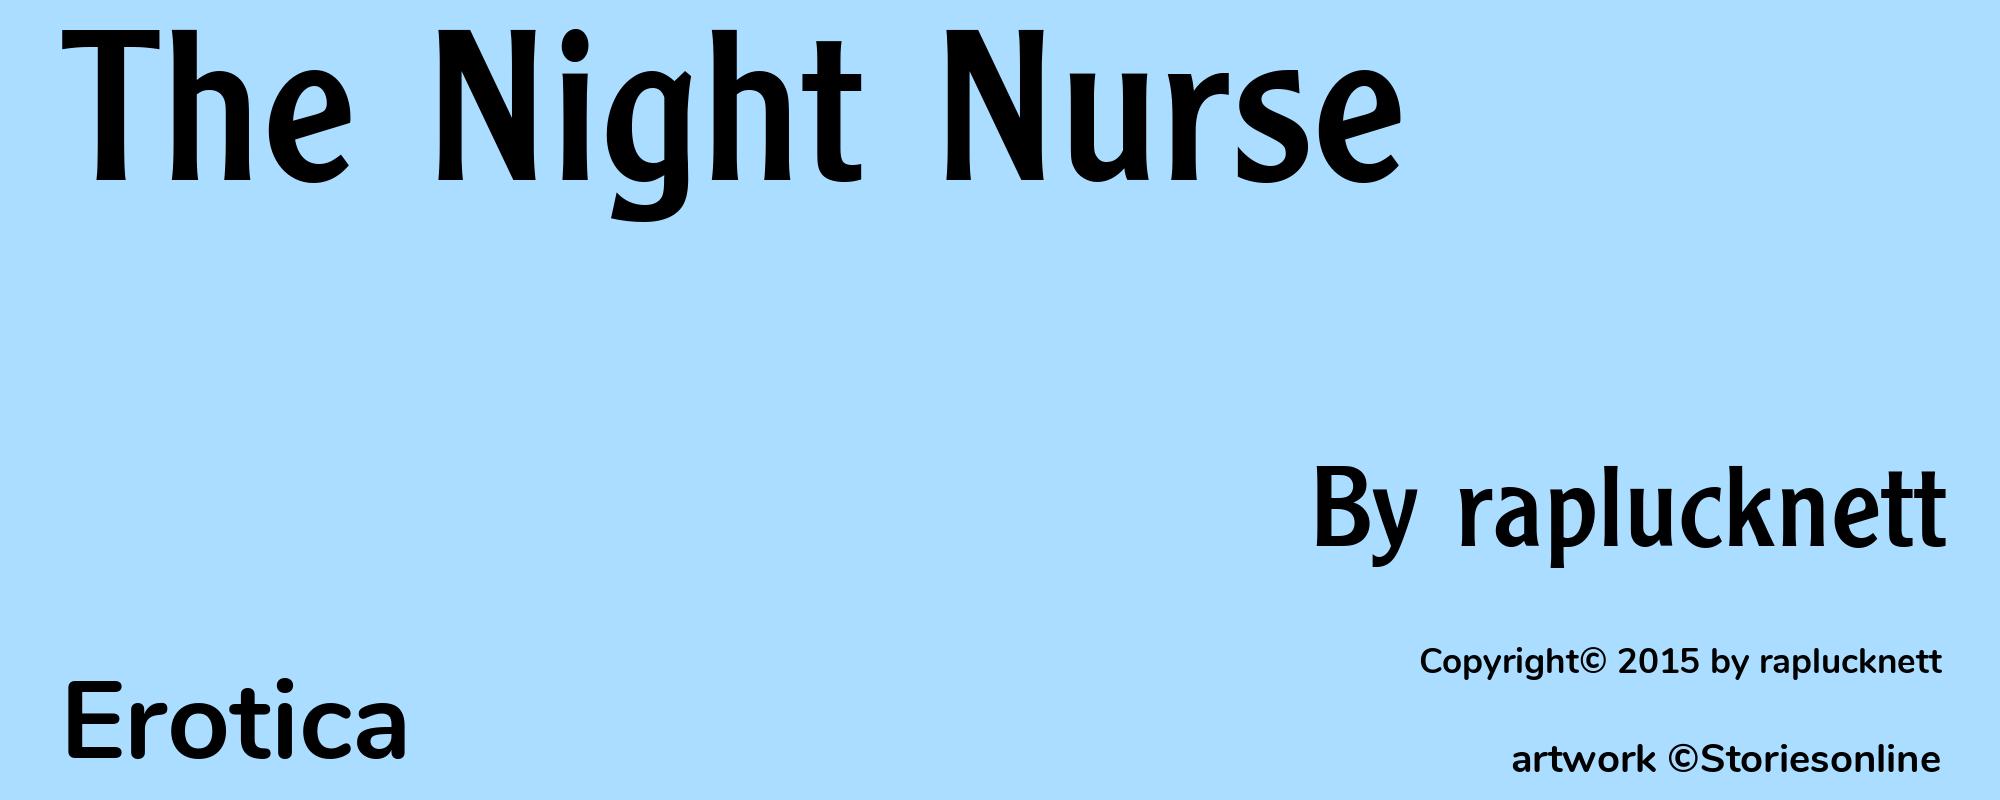 The Night Nurse - Cover